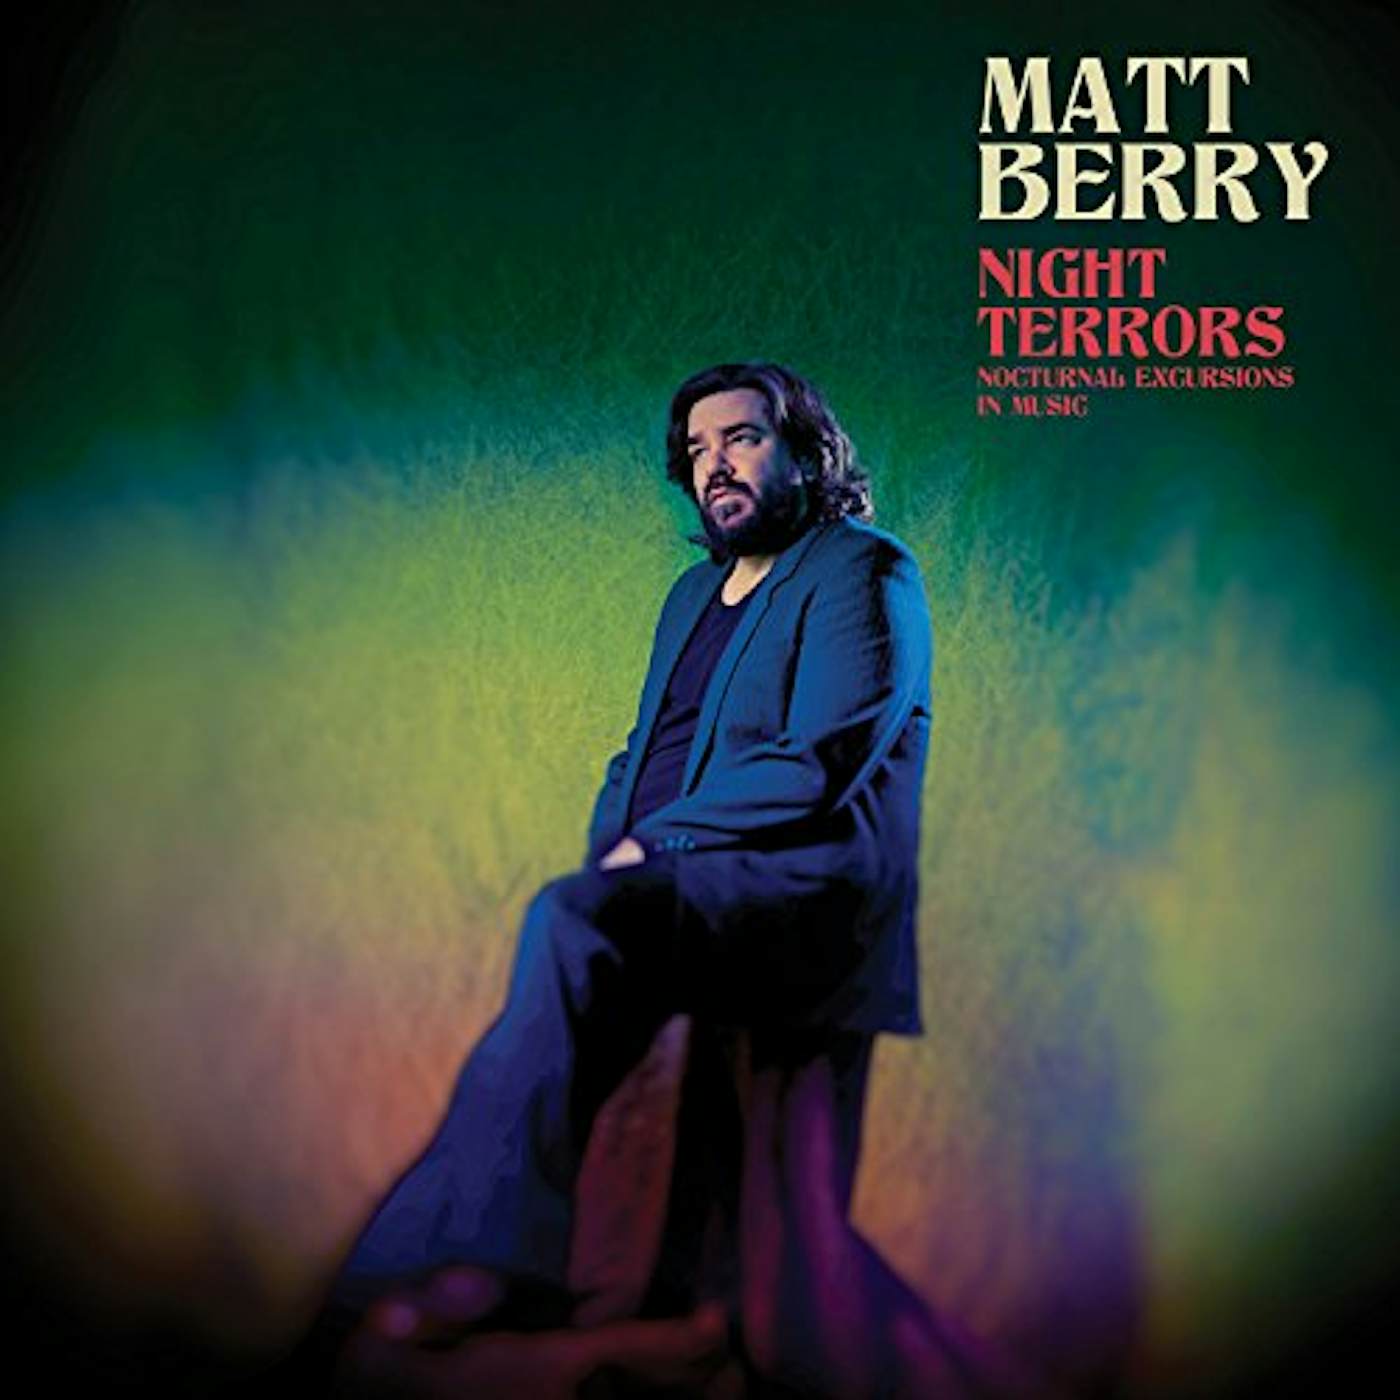 Matt Berry Night Terrors Vinyl Record